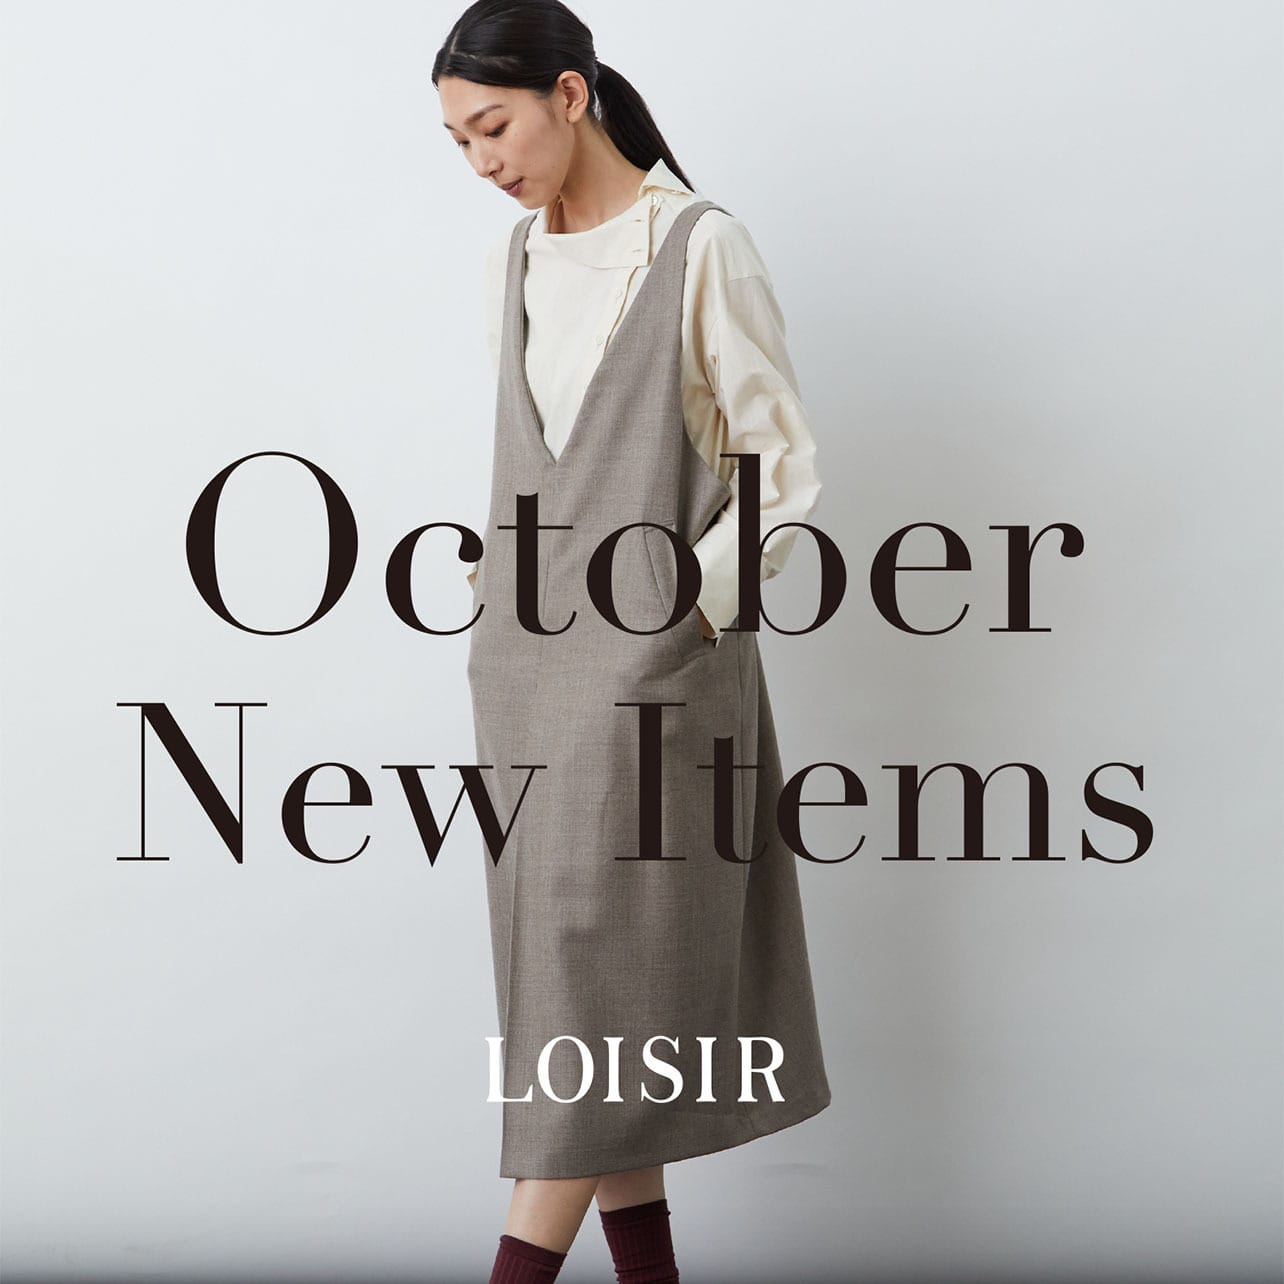 October New Items